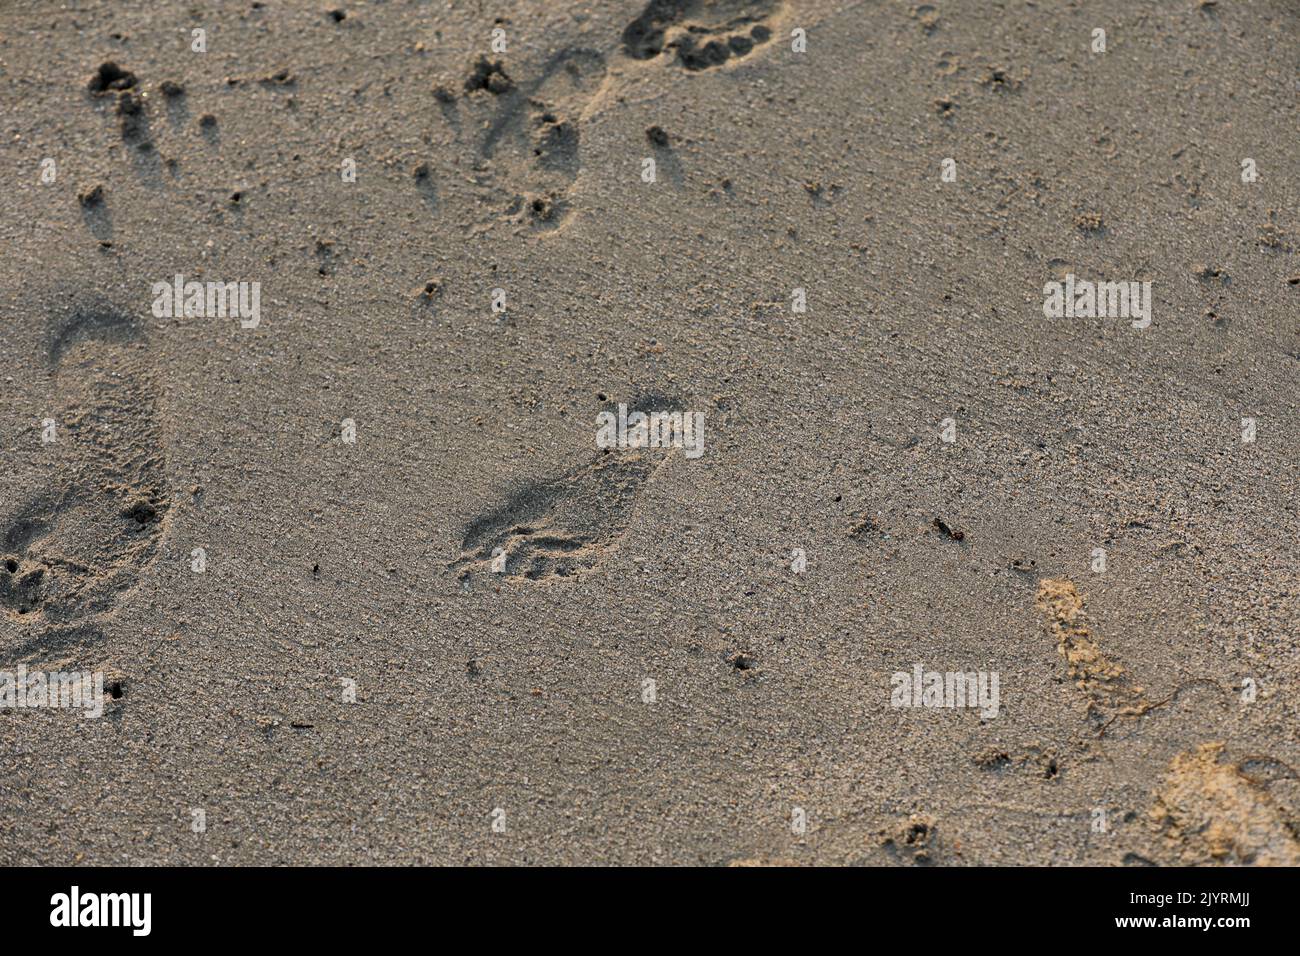 Footprint in the sand sandy beach Stock Photo